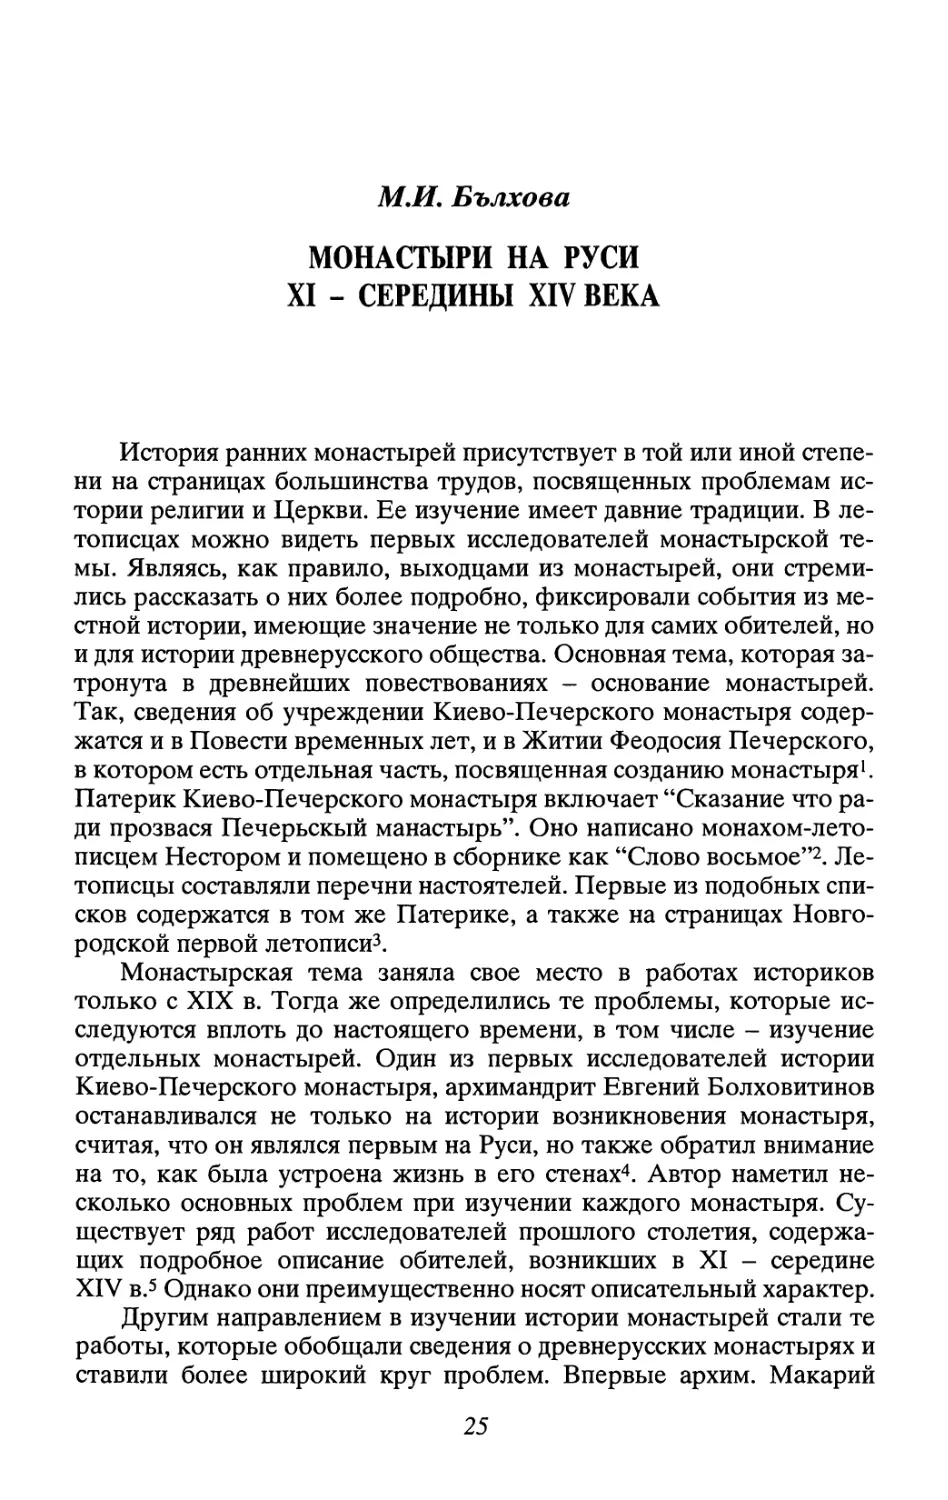 М. И. Бълхова. Монастыри на Руси XI – середины XIV века